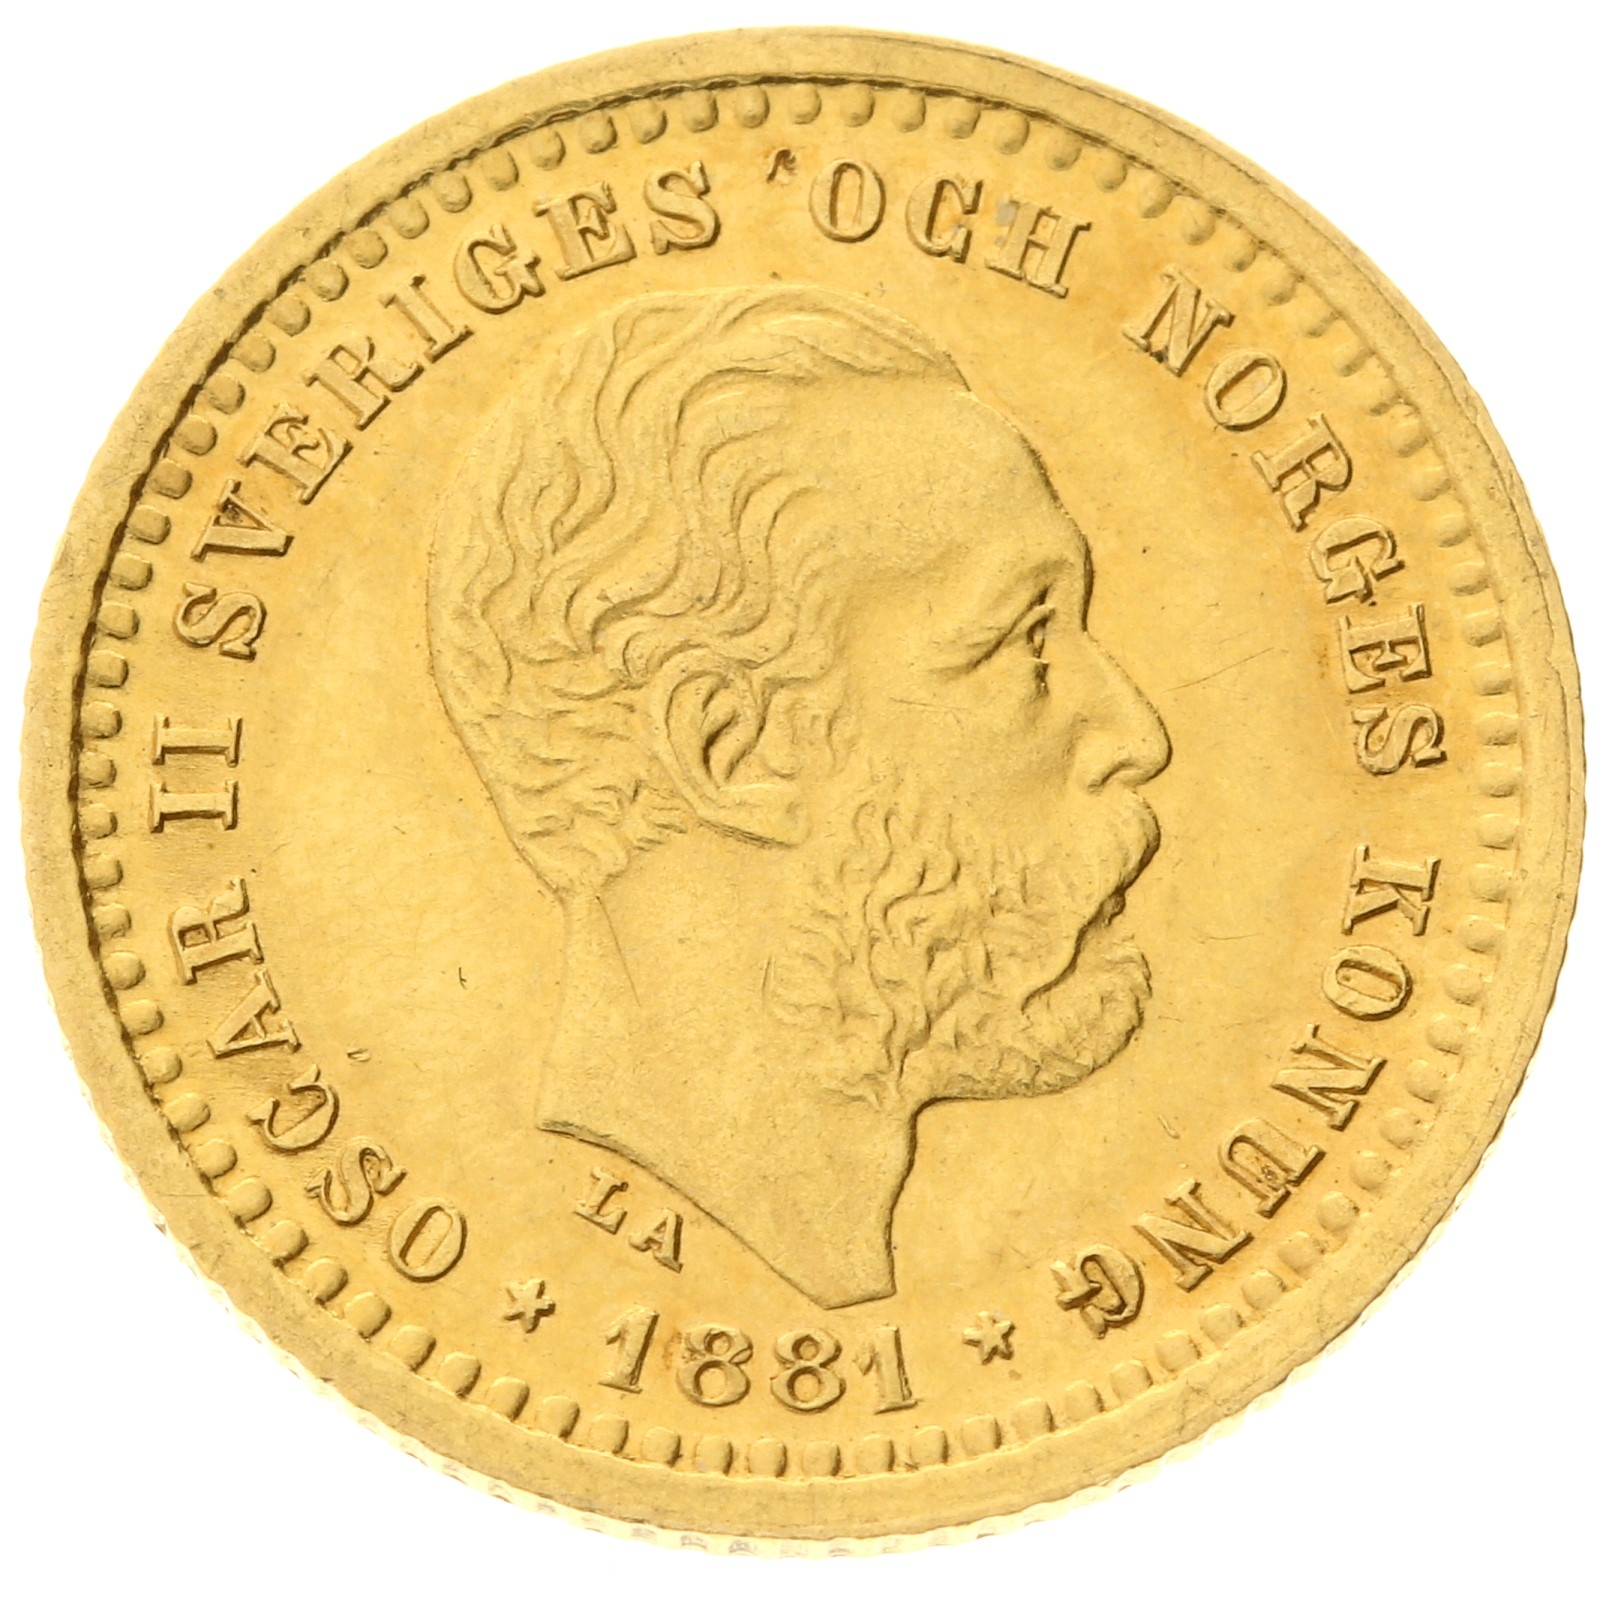 Sweden - 5 kronor - 1881 - Oscar II